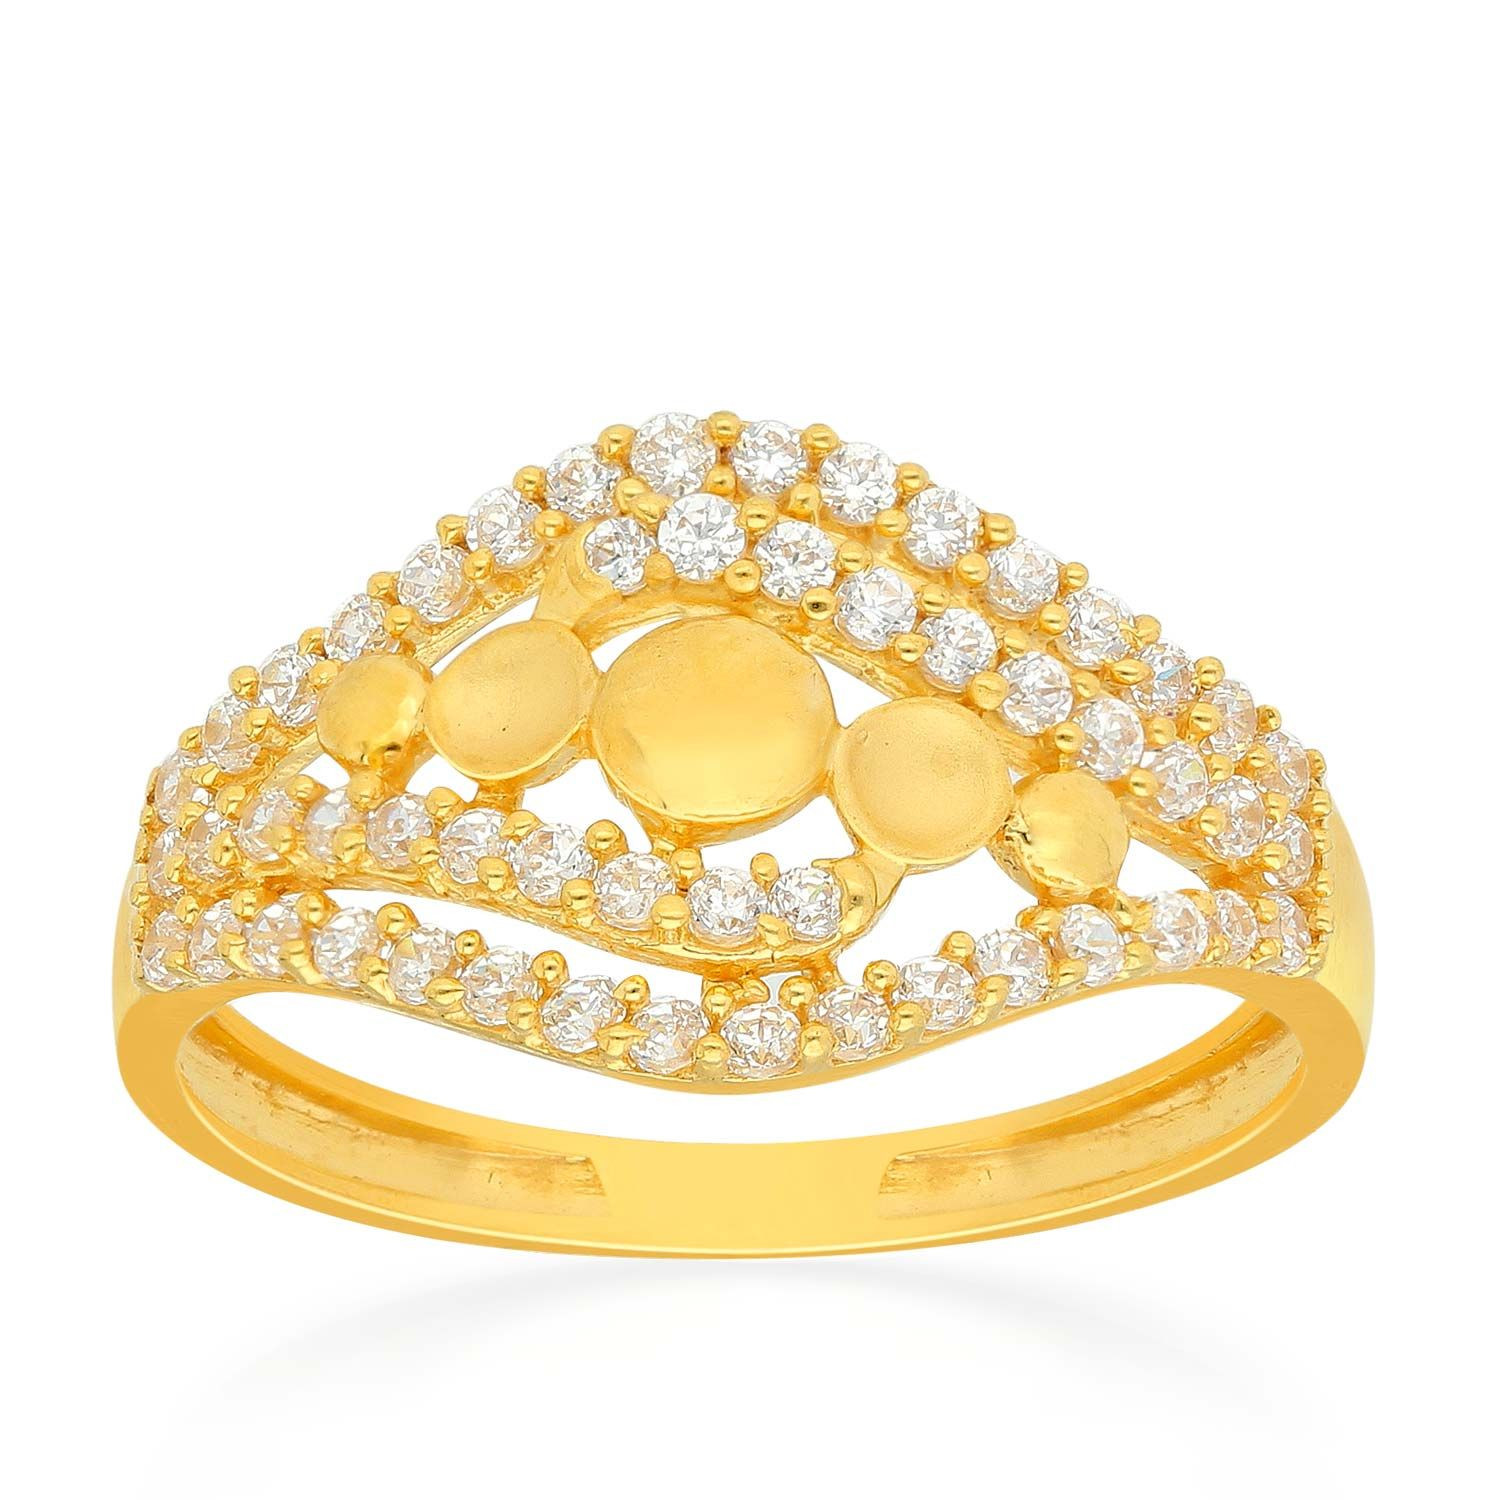 Gold Polki Ring with CZ Diamond - Shafalie's Fashions